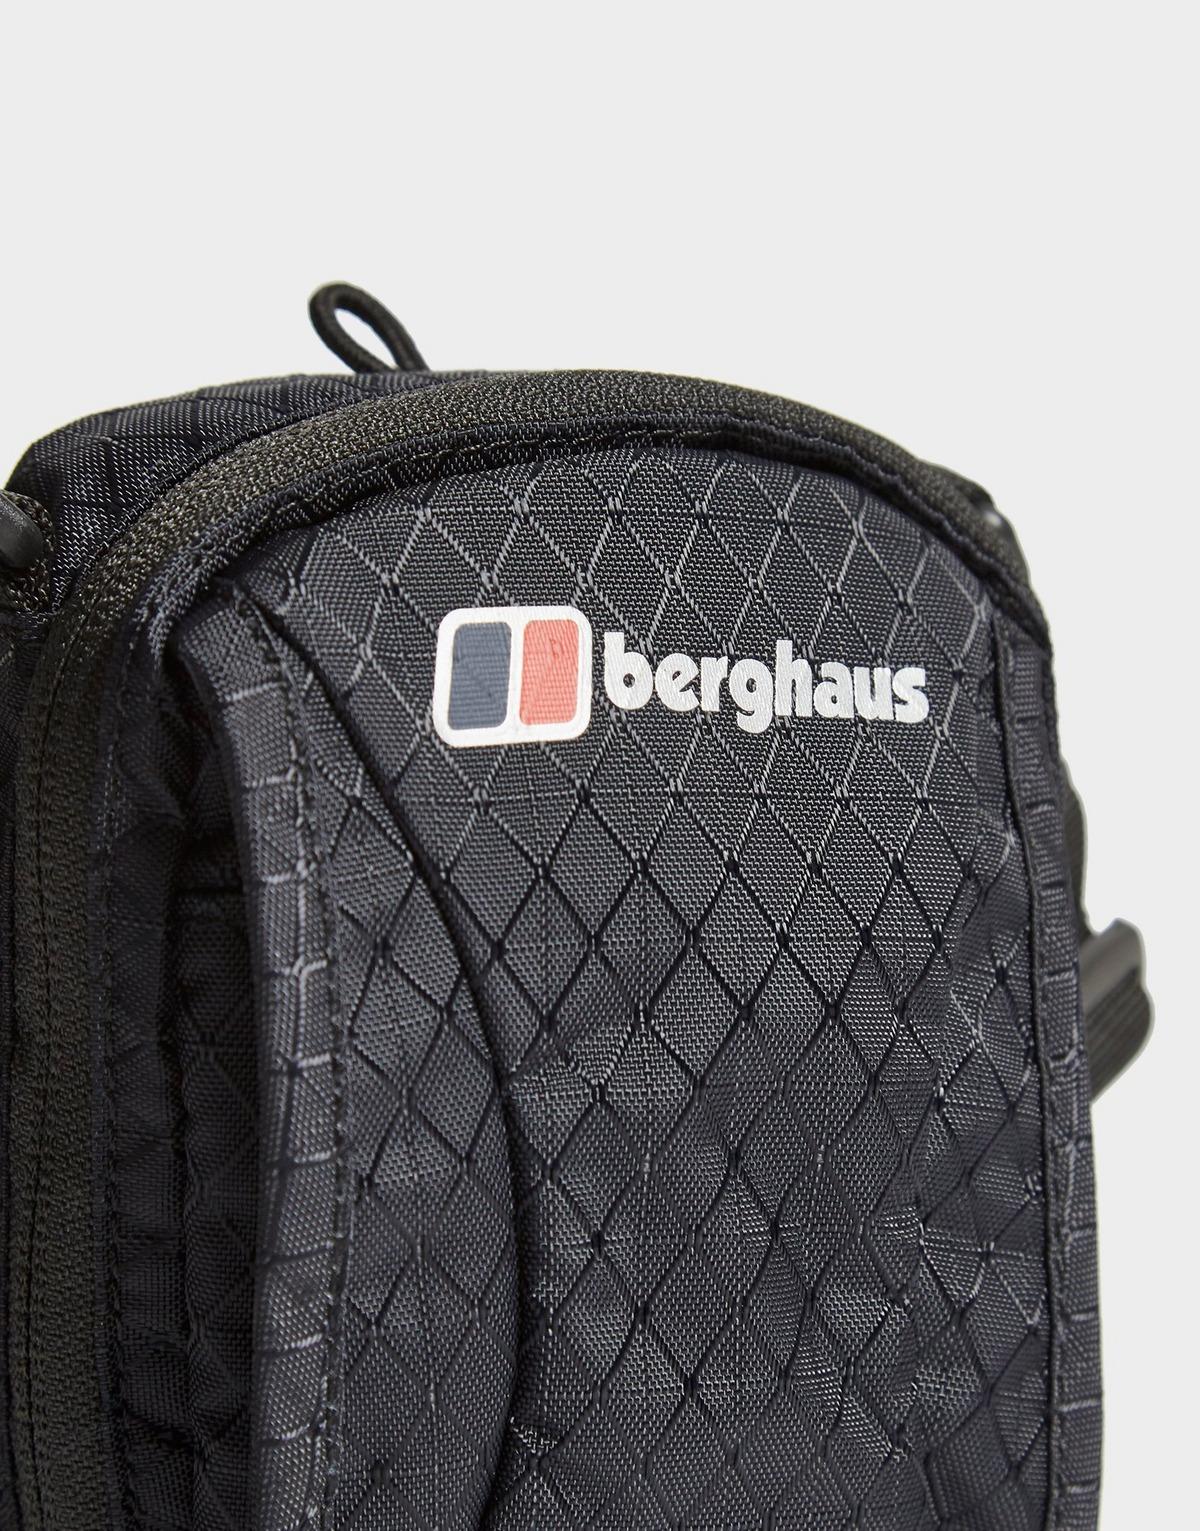 Berghaus Canvas Small Organiser Mule Bag in Black for Men - Lyst